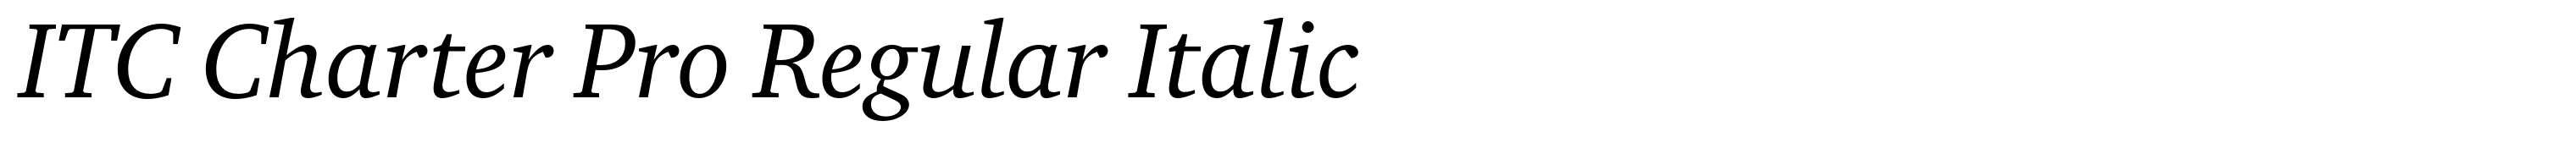 ITC Charter Pro Regular Italic